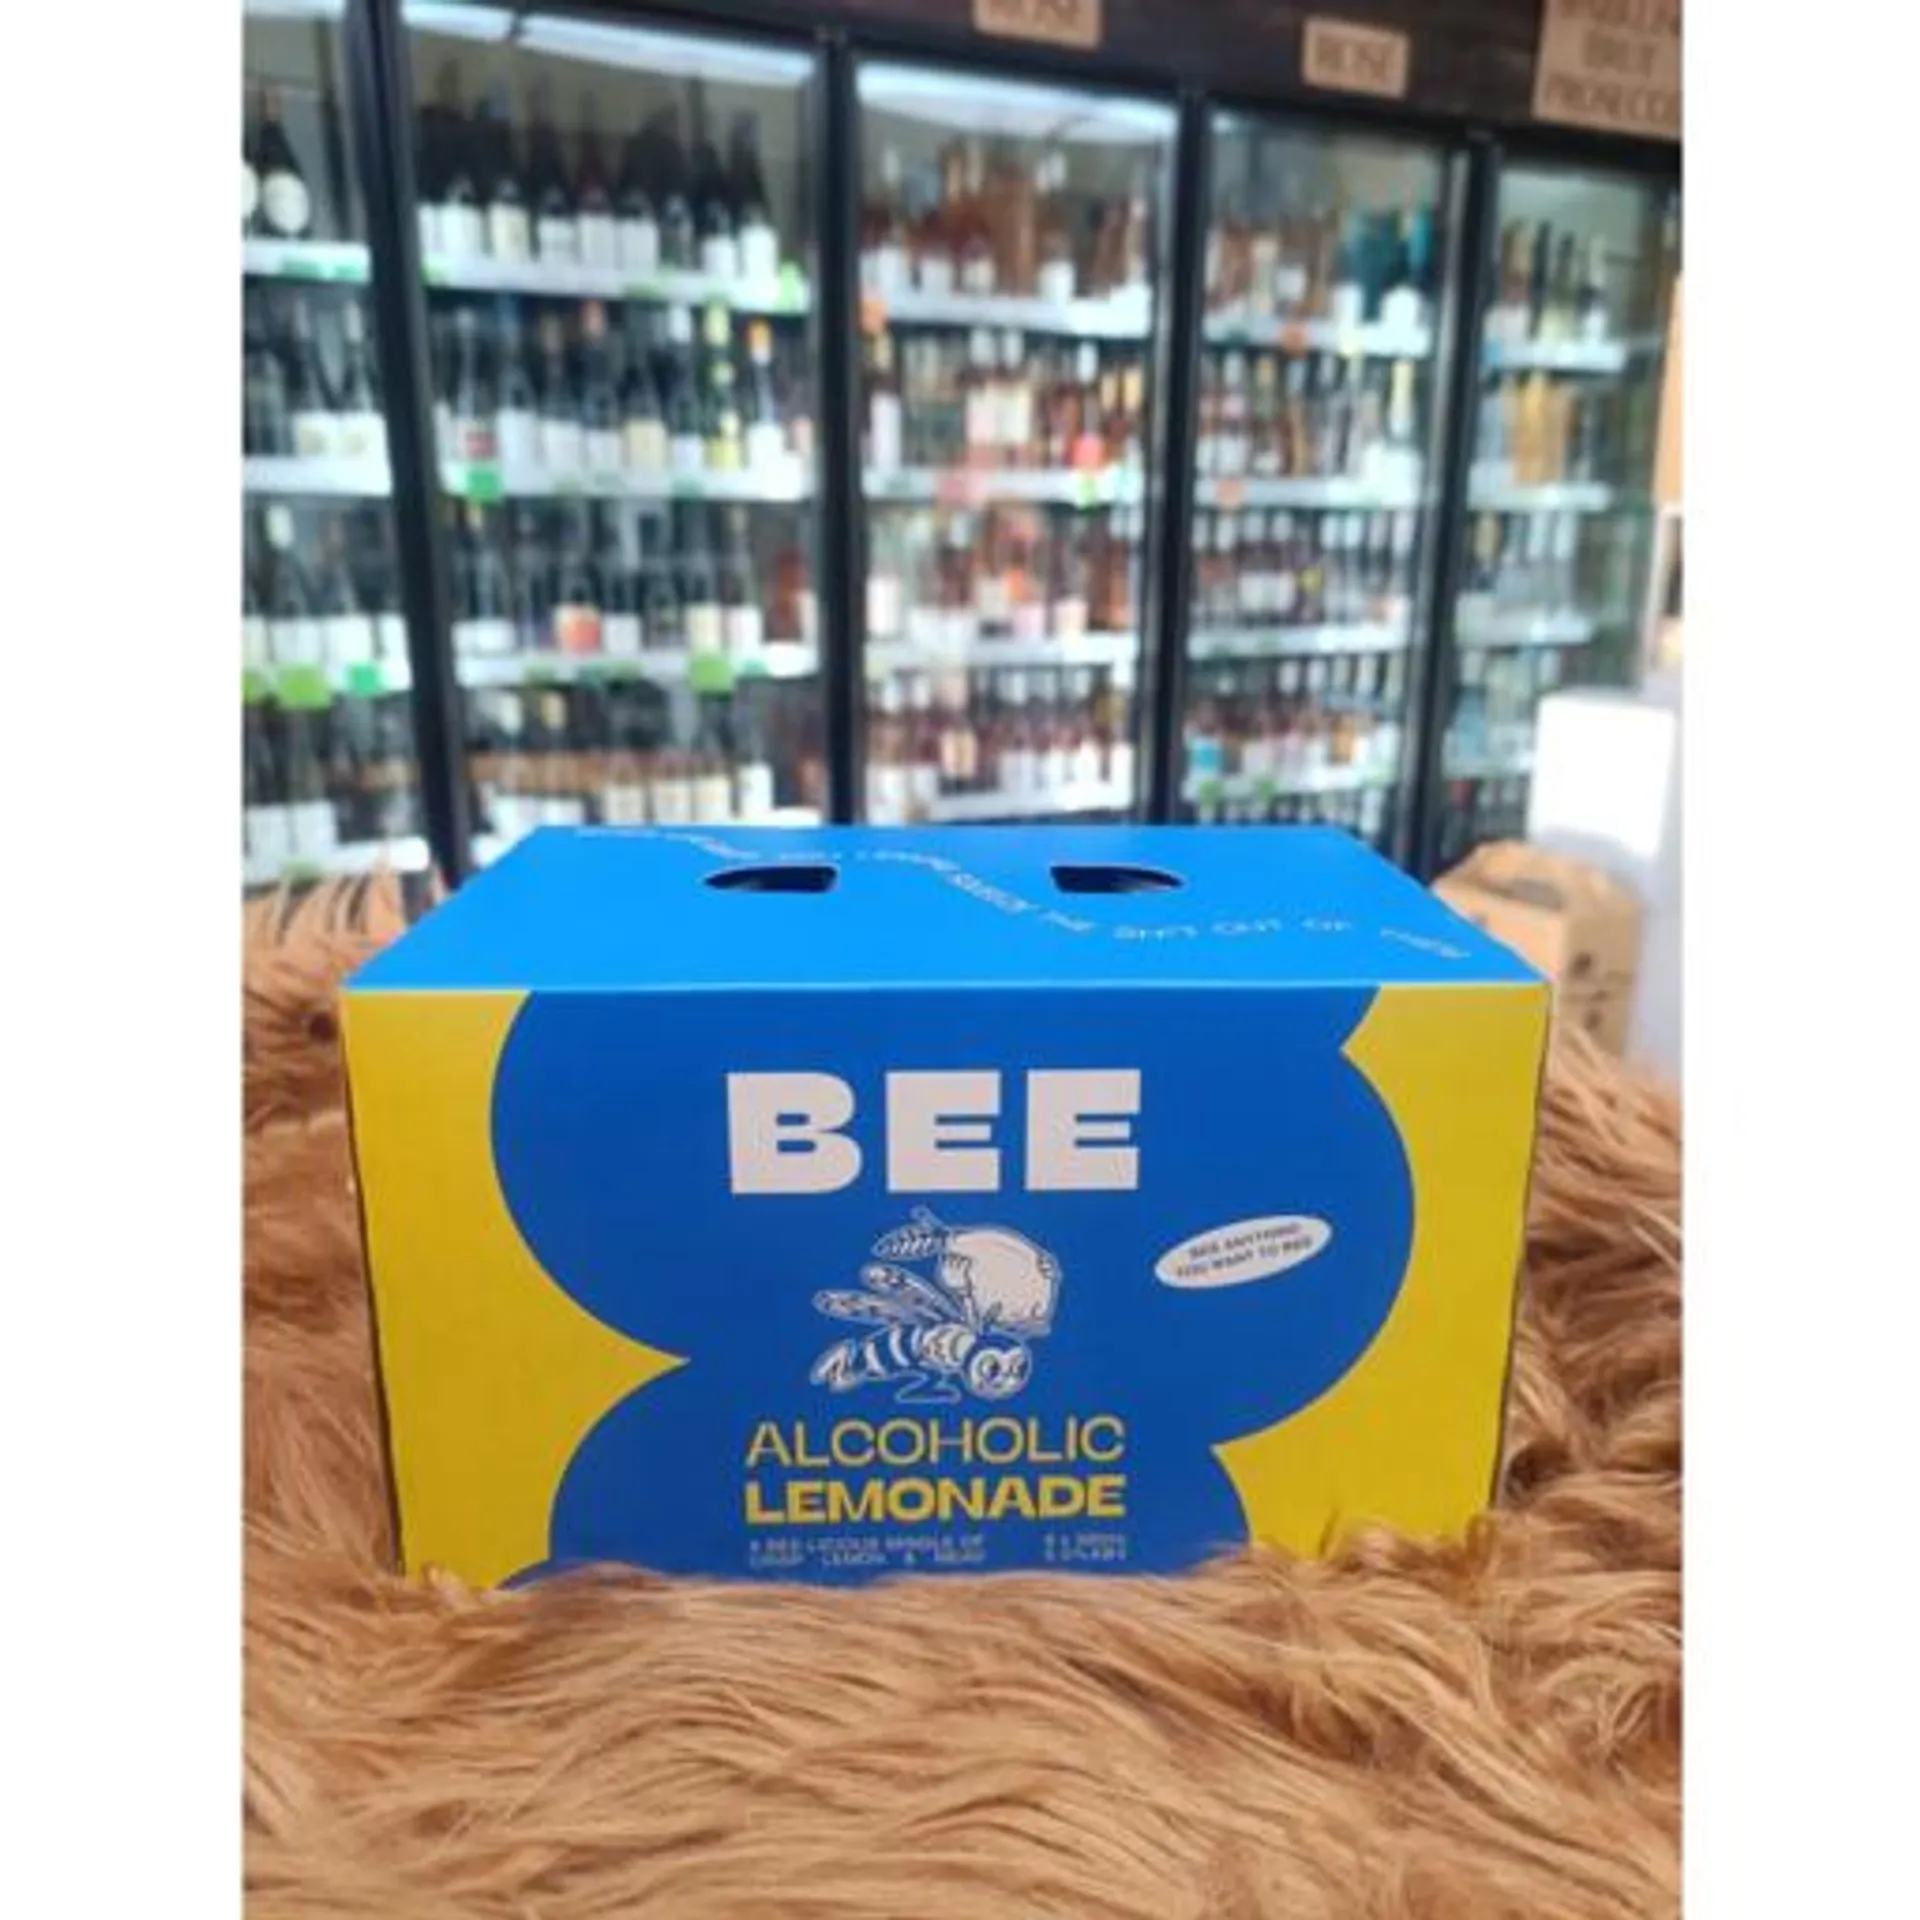 Bee Alcoholic Lemonade 330ml 6 Pack